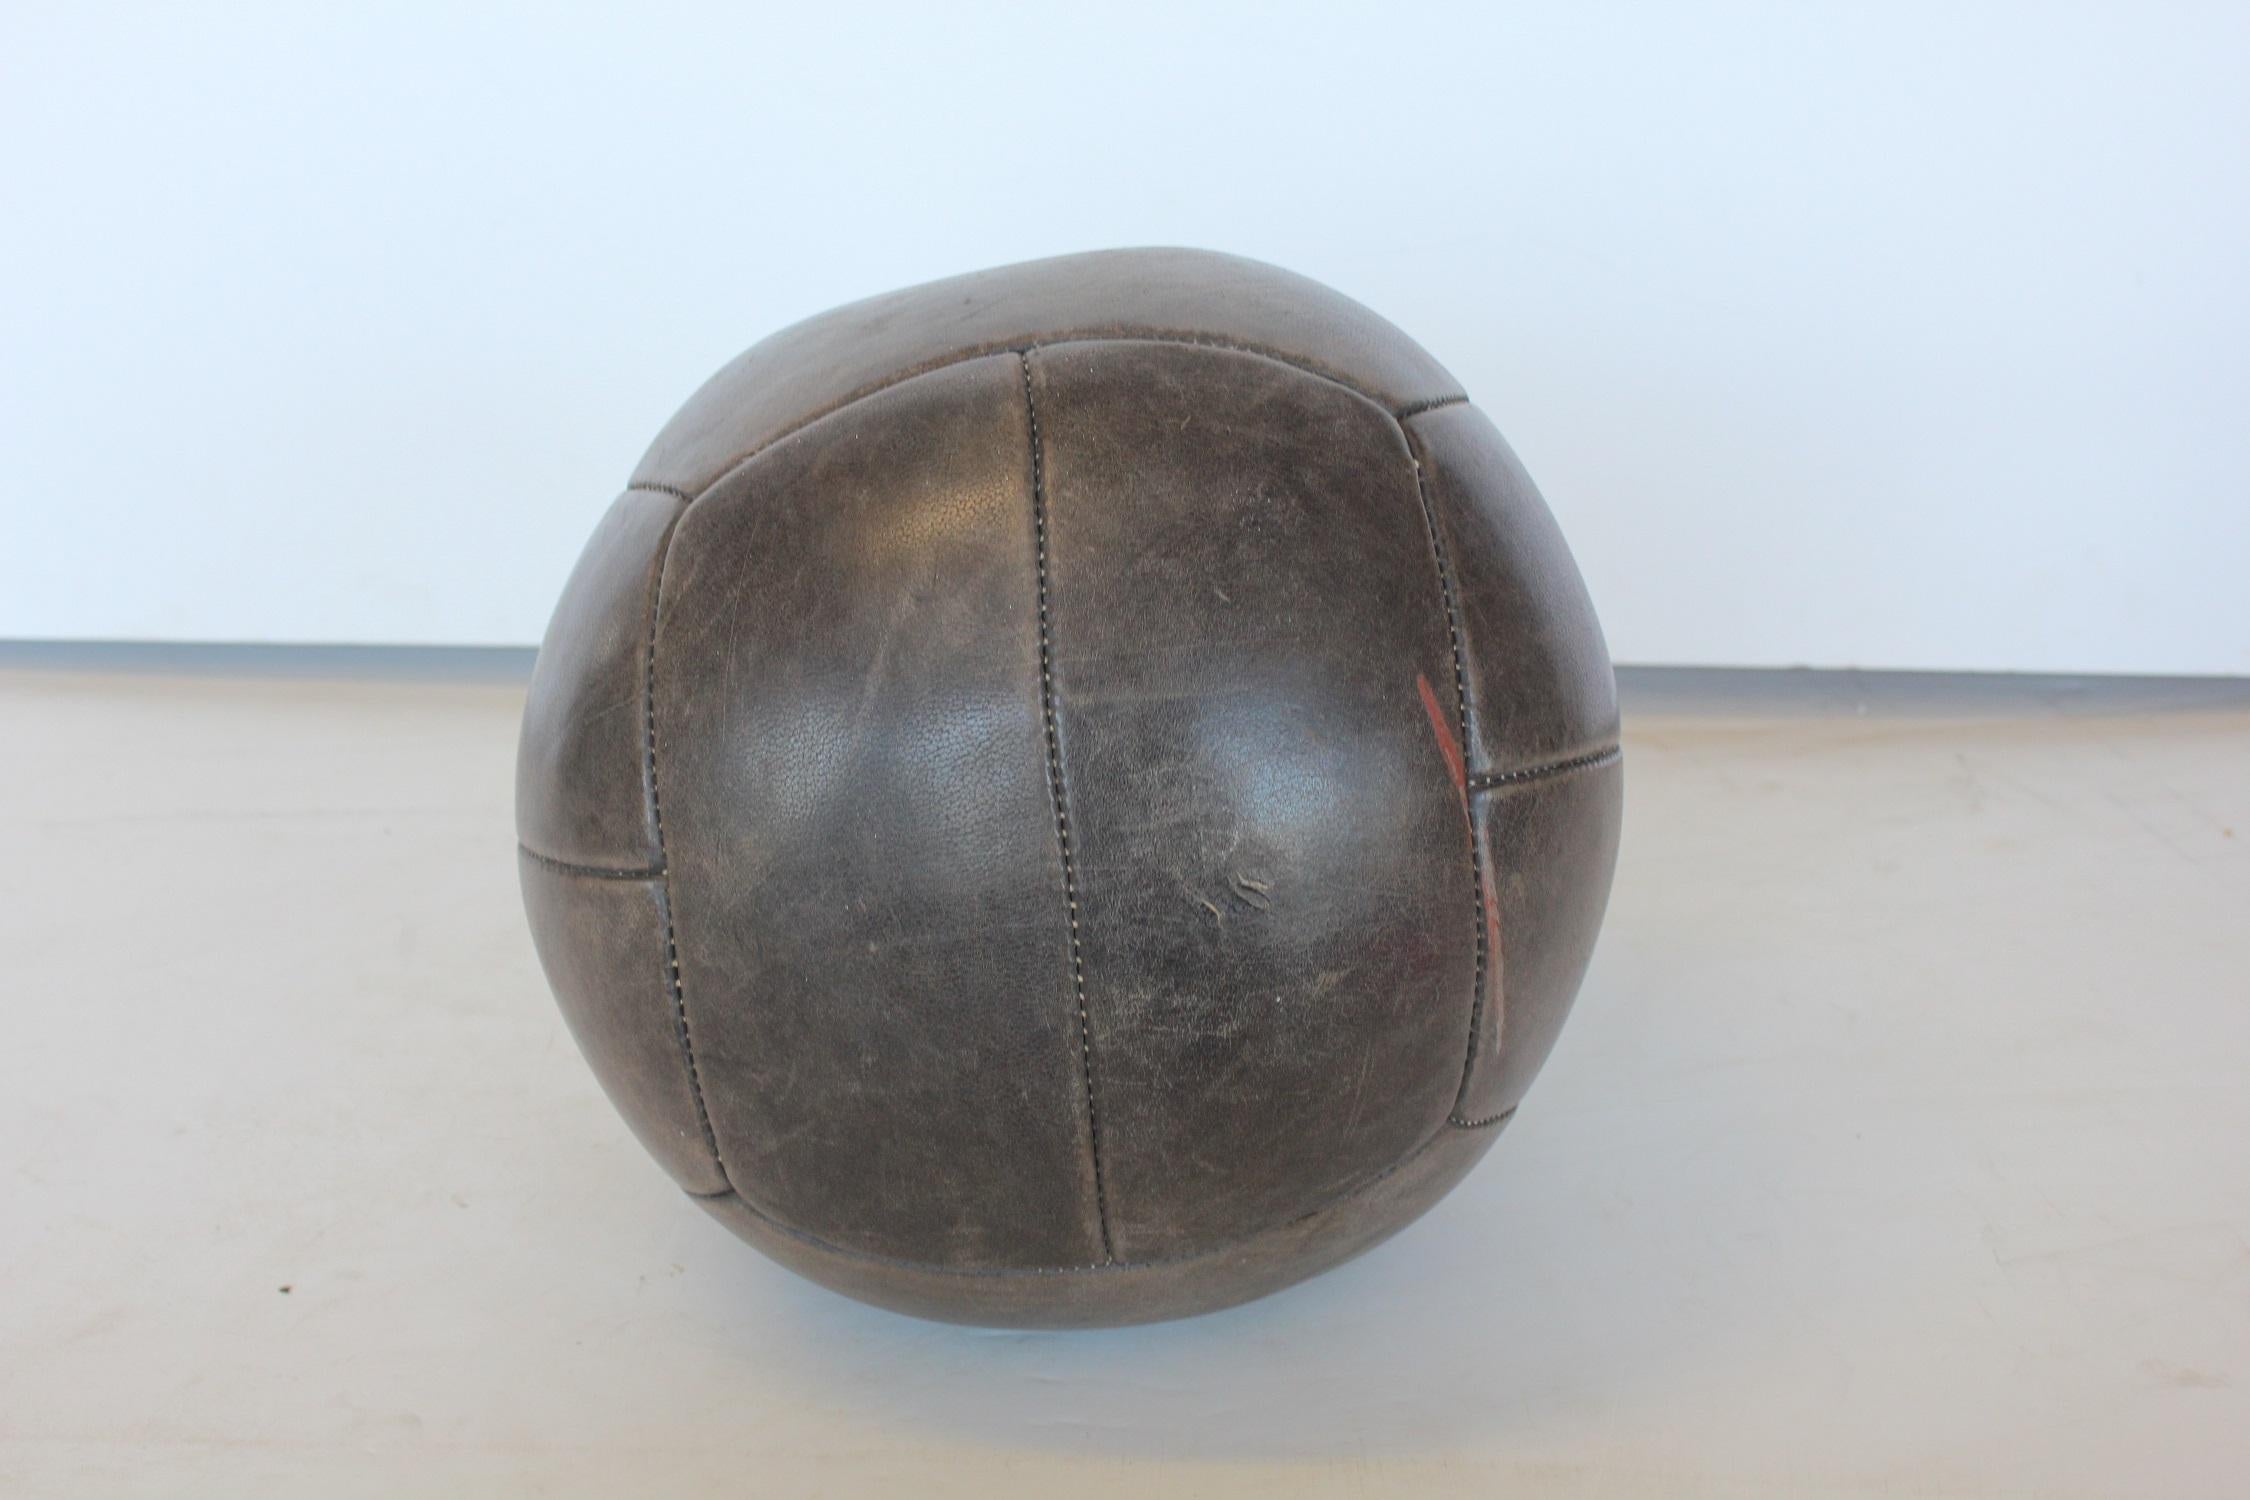 Vintage leather hand-stitched medicine ball.